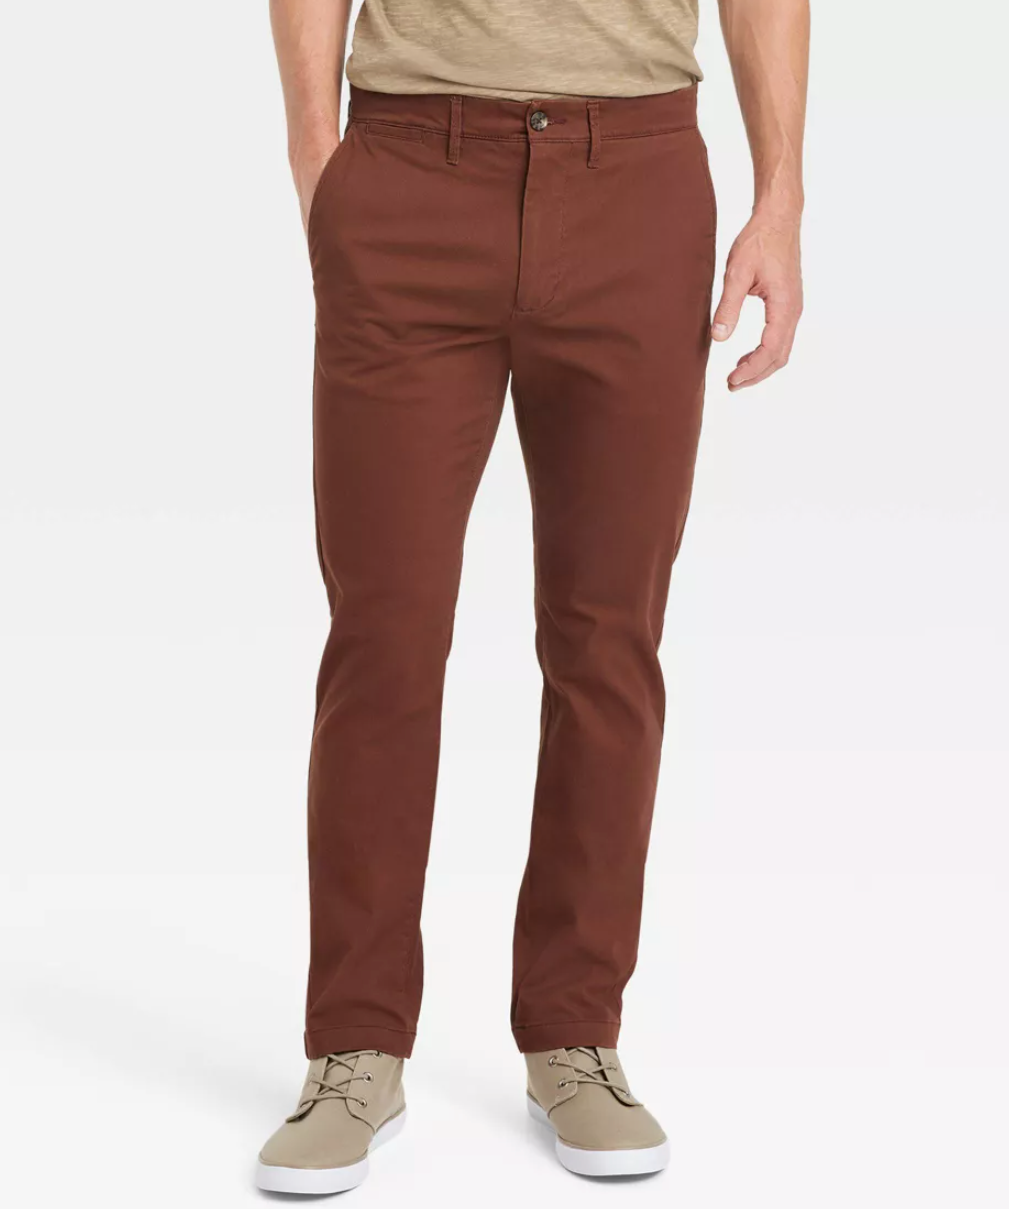 Target - Men's Every Wear Slim Fit Chino Pants